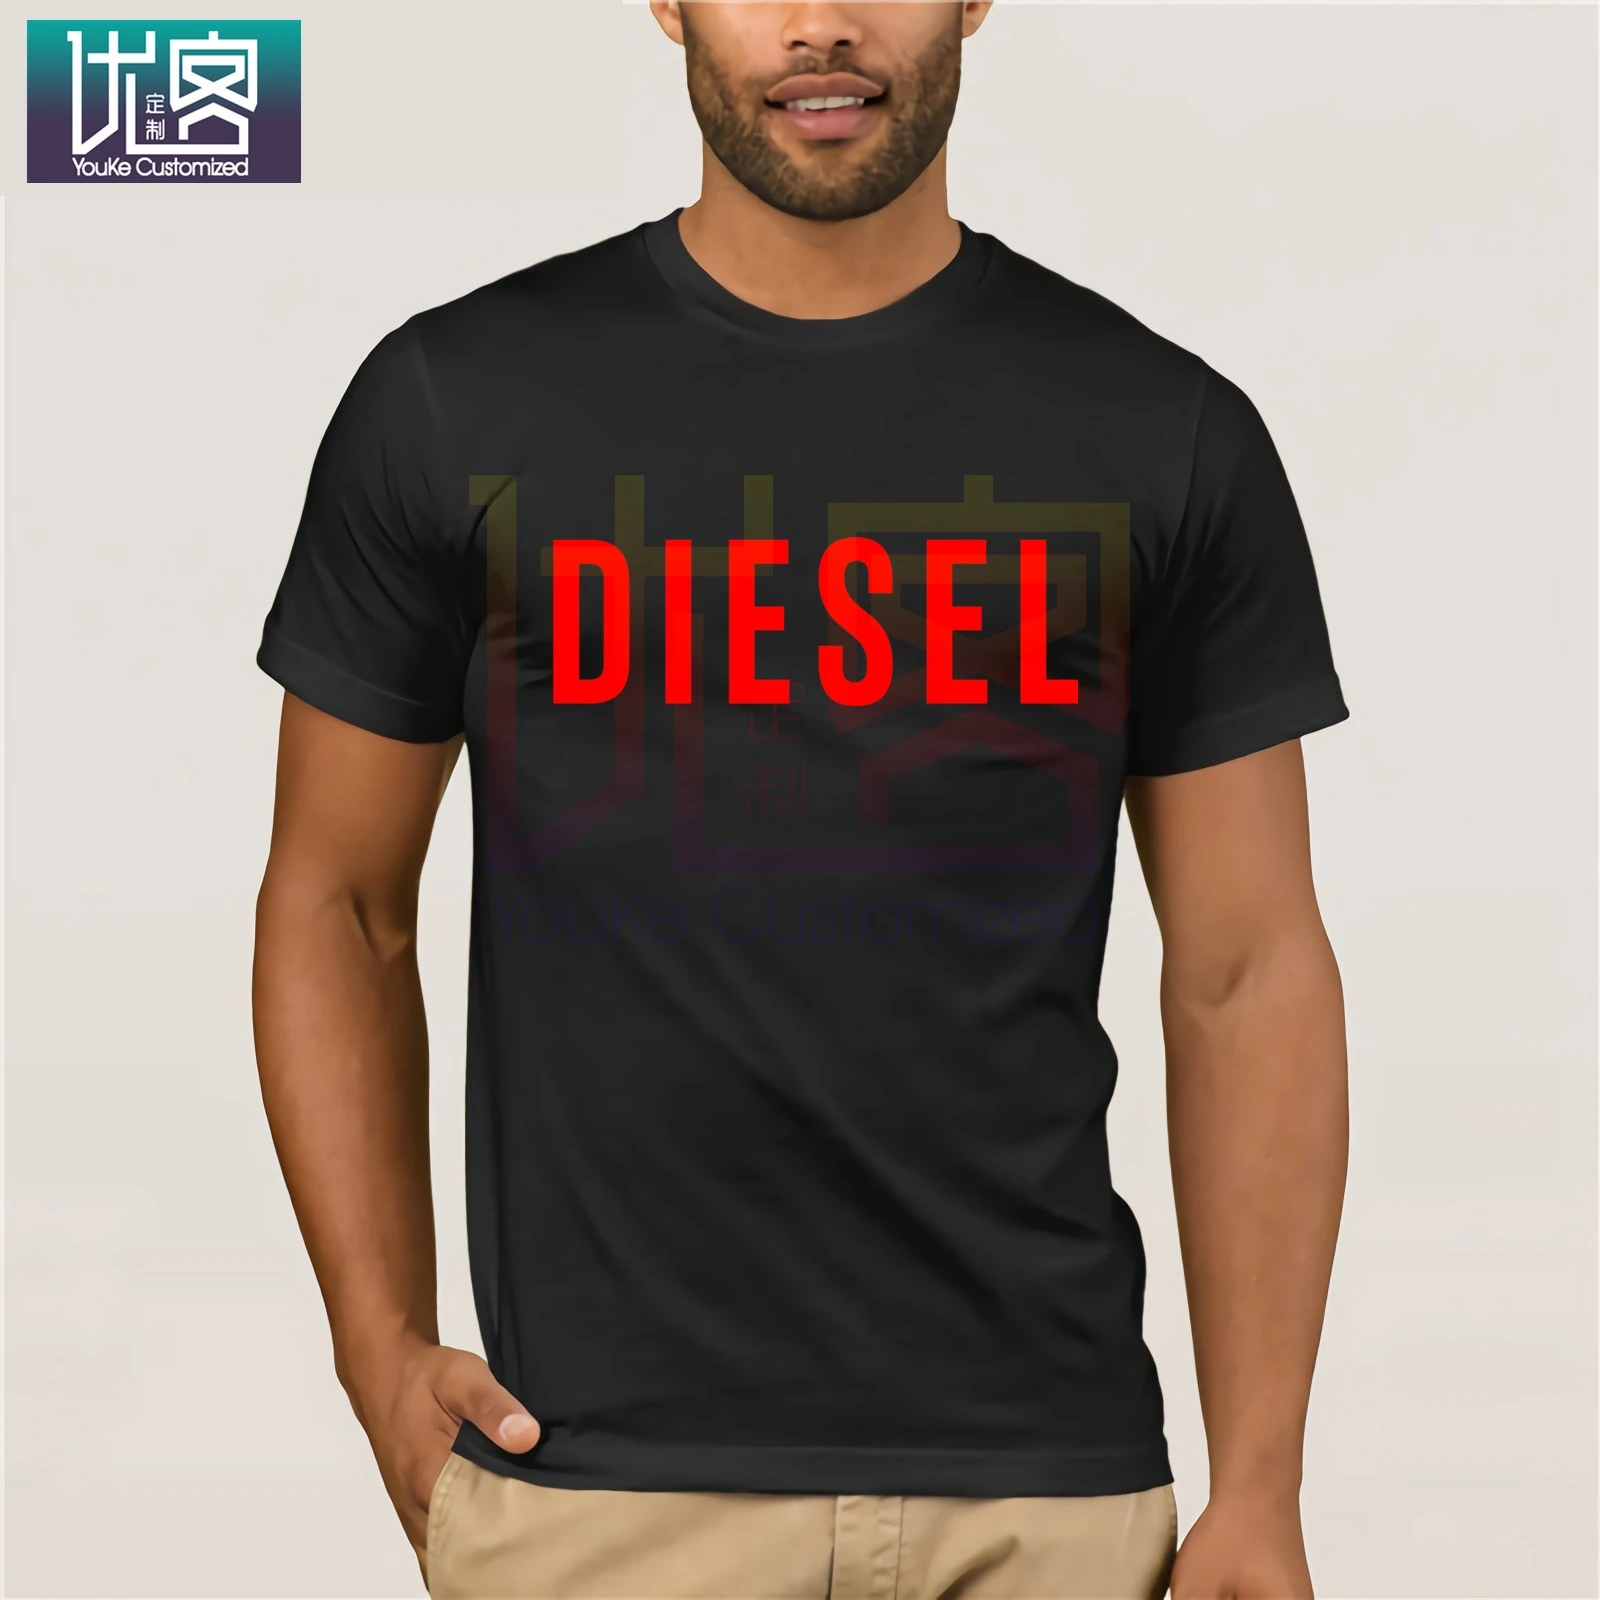 Diesel Putere Tricouri Haine Populare tricou Crewneck din Bumbac Tricouri Topuri de Vara Tricouri Bumbac Gât O Herre T-Shirt pentru Barbati Topuri